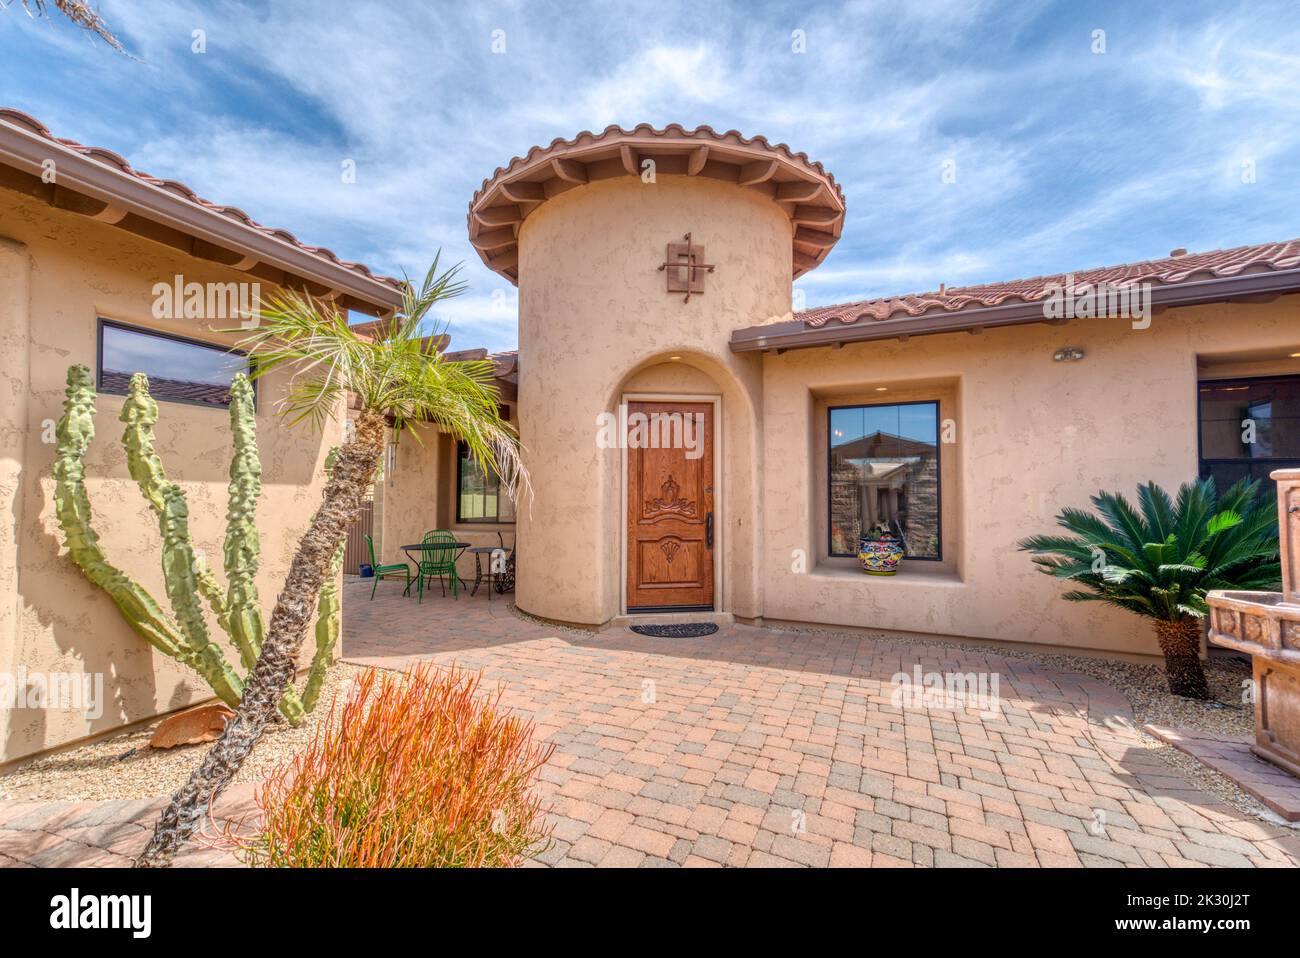 A Spanish southwestern home in arizona Stock Photo